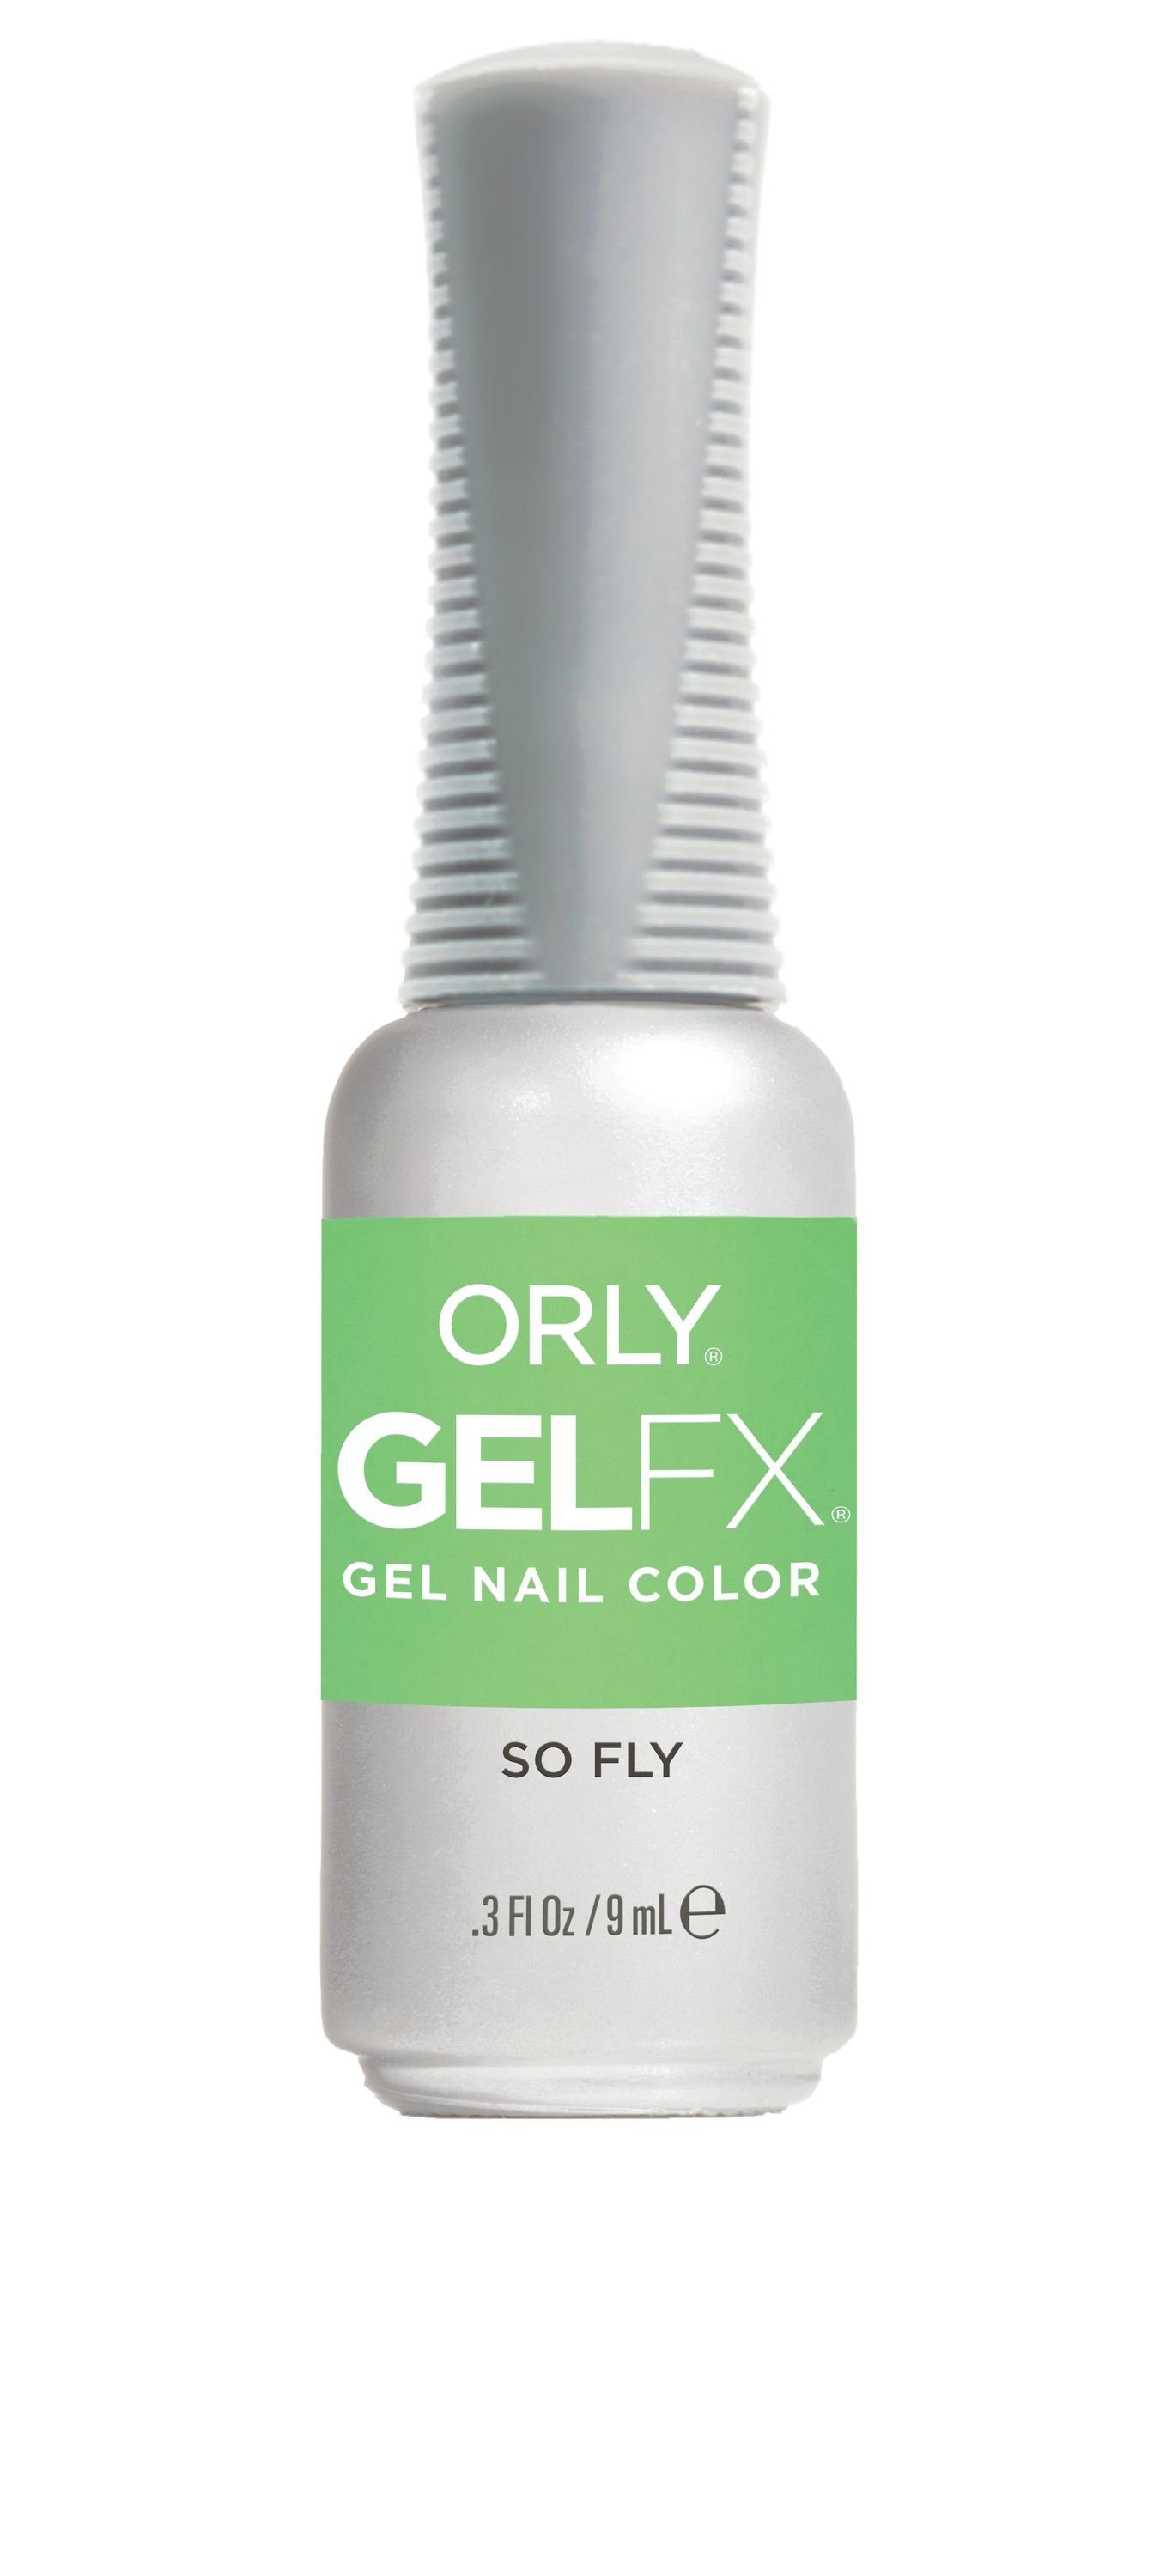 ORLY UV-Nagellack GEL FX So Fly, 9ML | Nagellacke